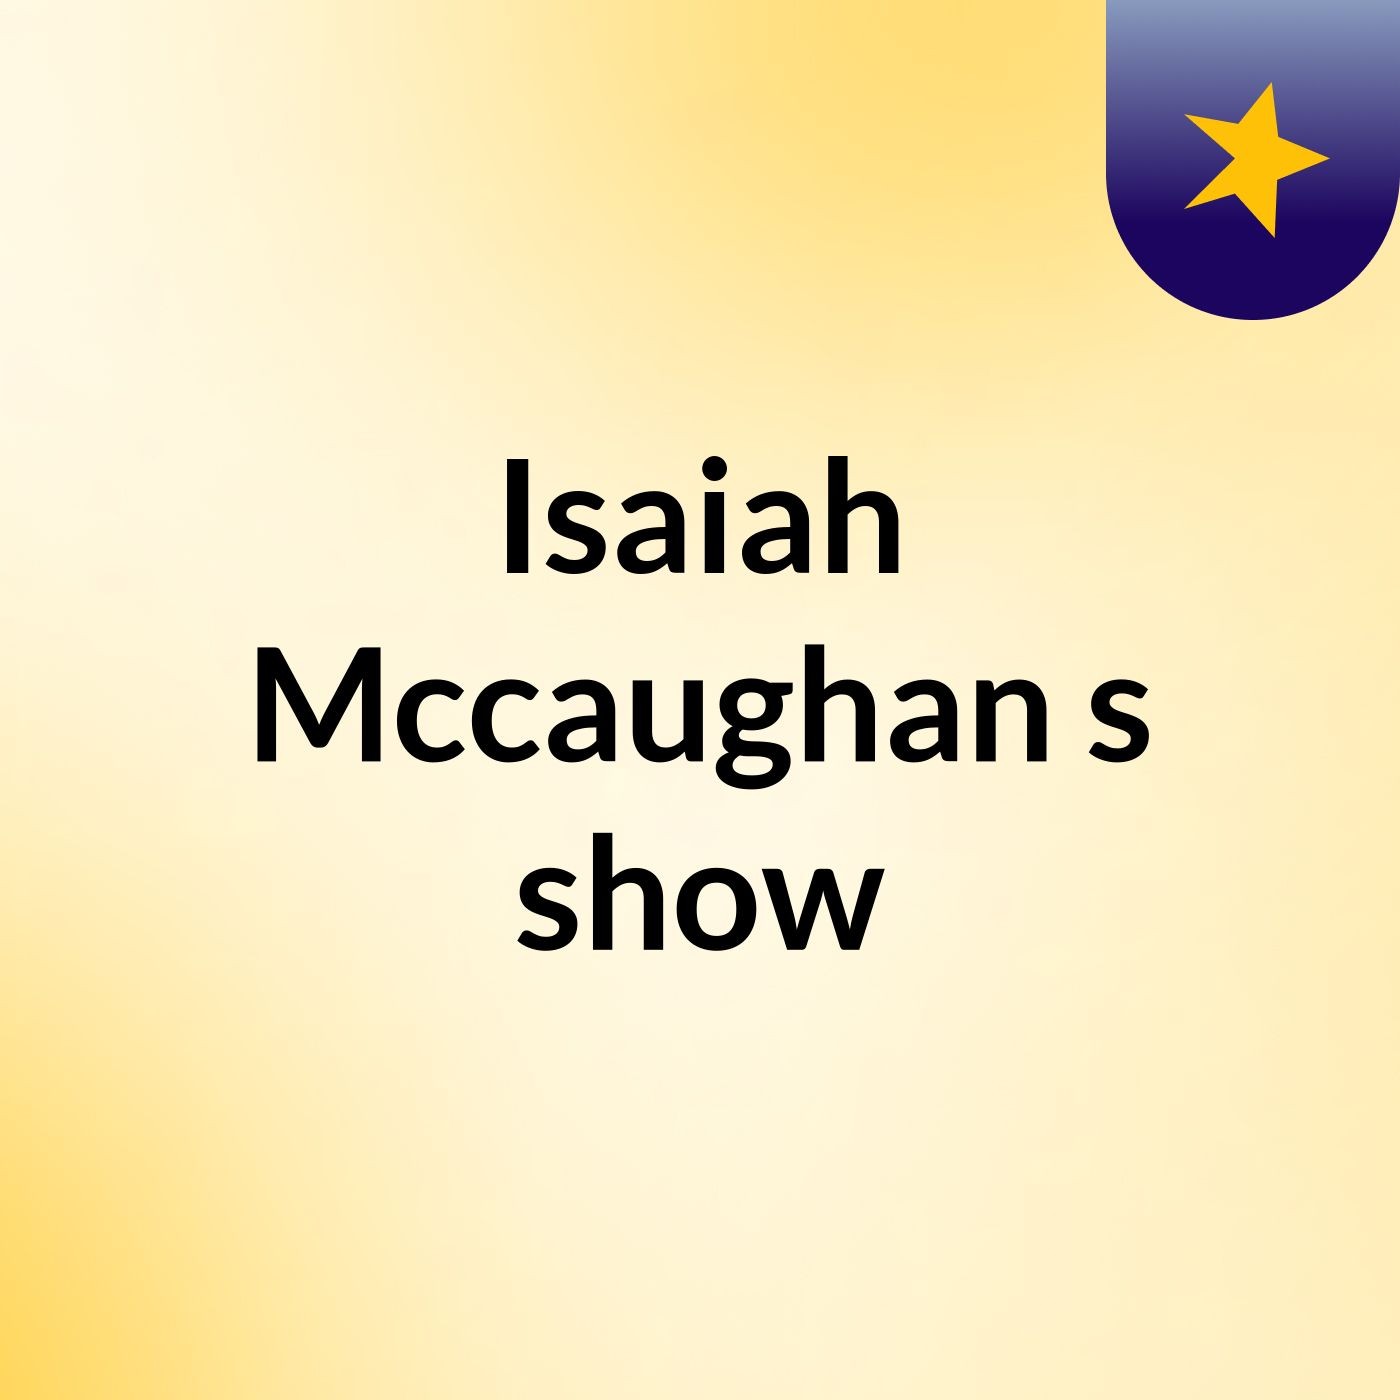 Isaiah Mccaughan's show